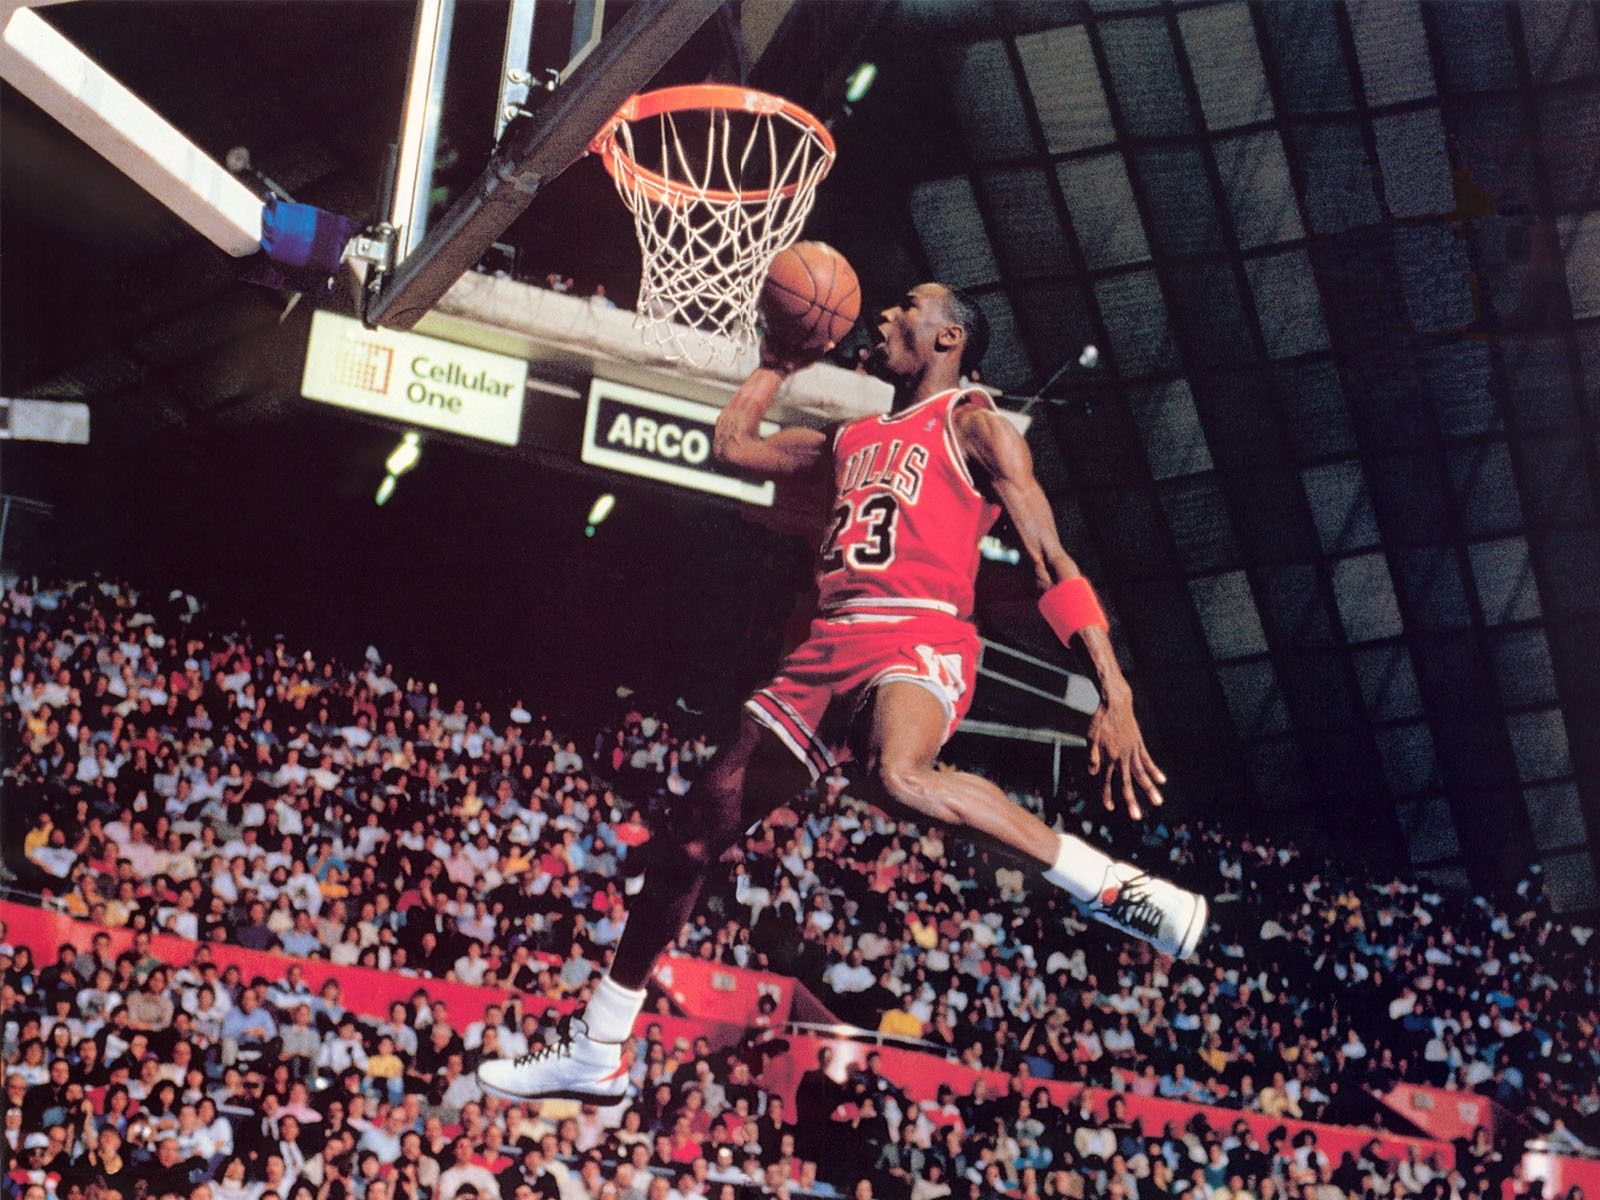 f soccer: Michael Jordan HD Wallpaper